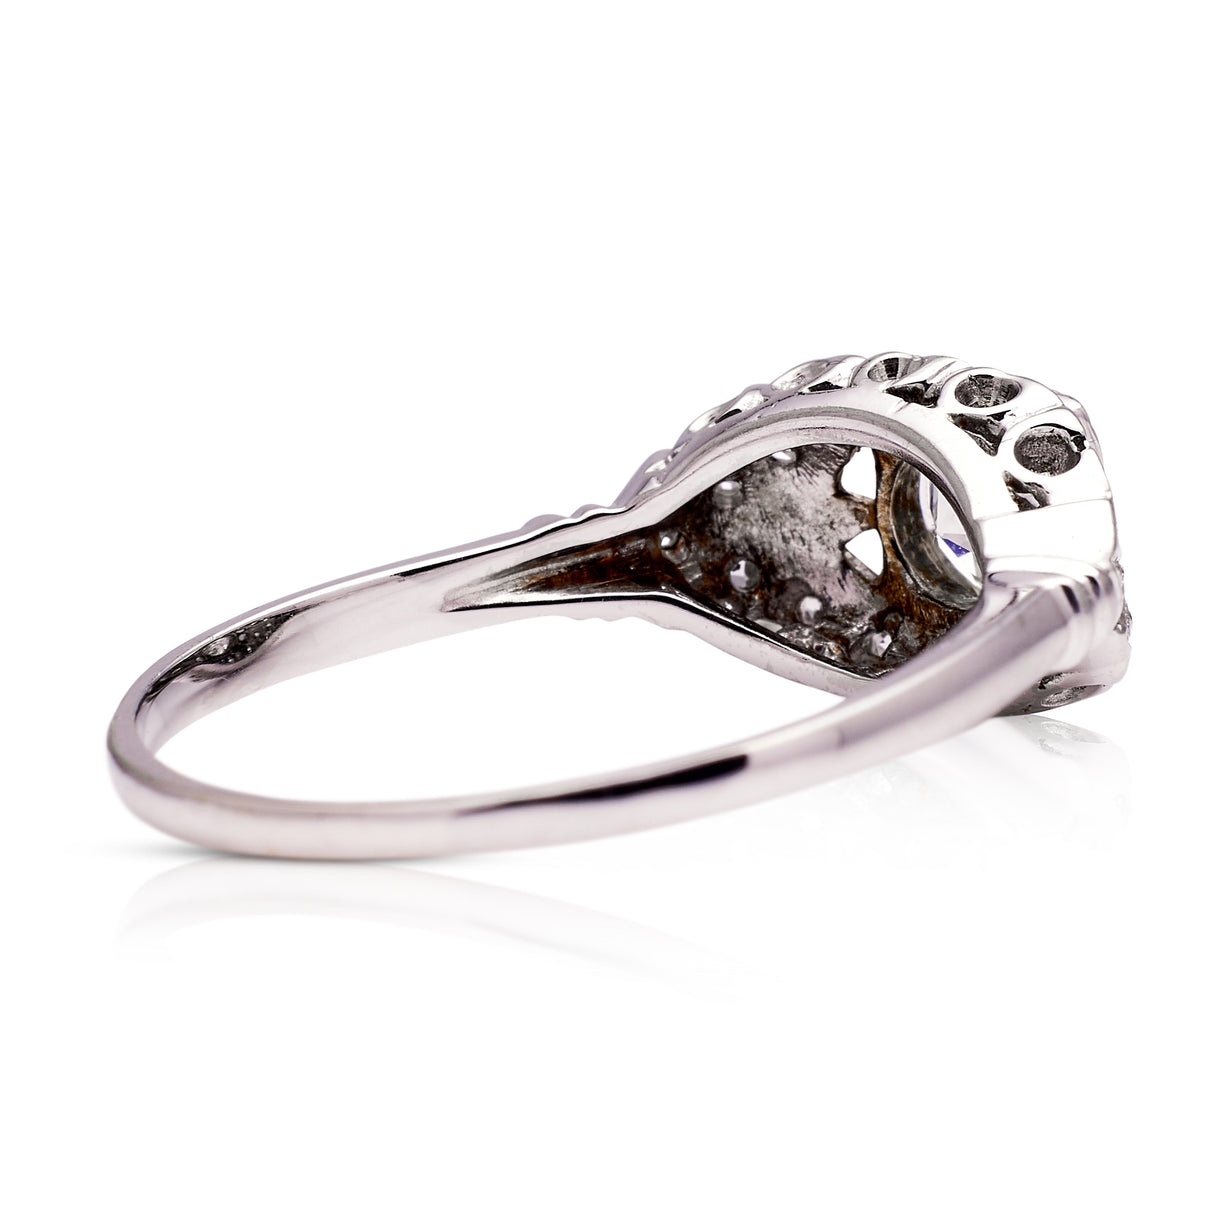 Art Deco diamond engagement ring, rear view.